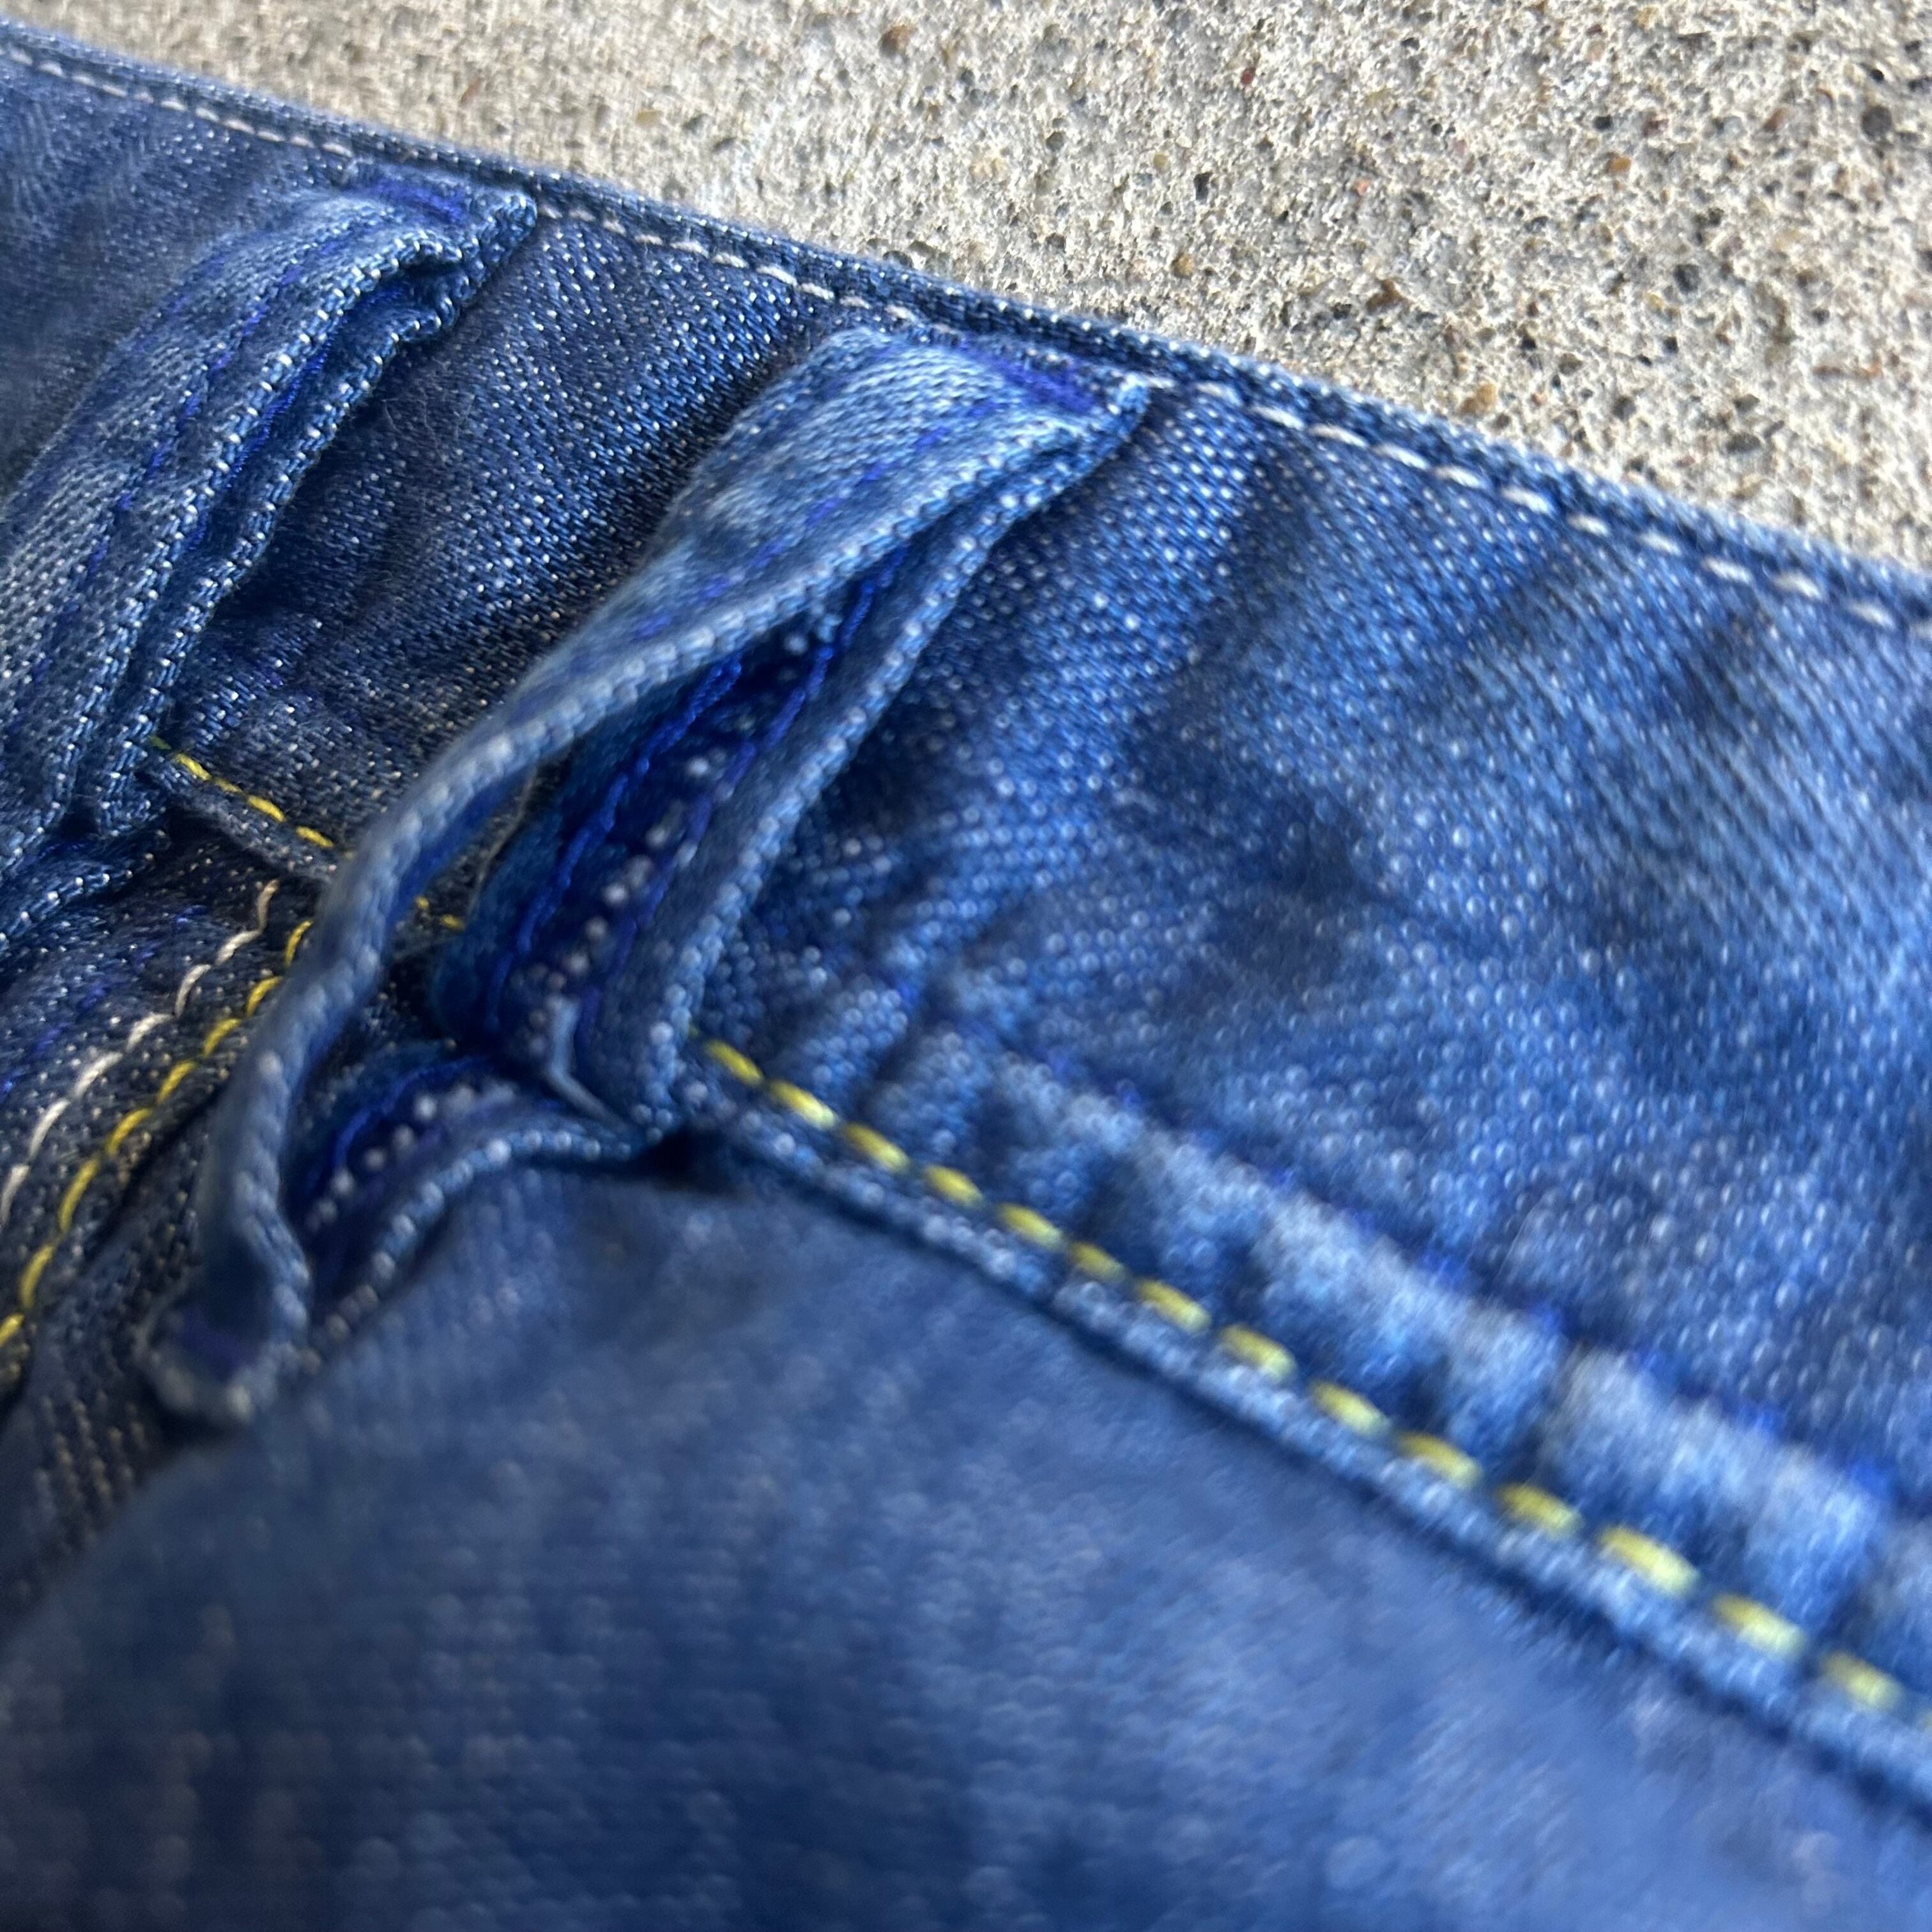 Diesel jeans pants ディーゼル ジーンズ パンツ